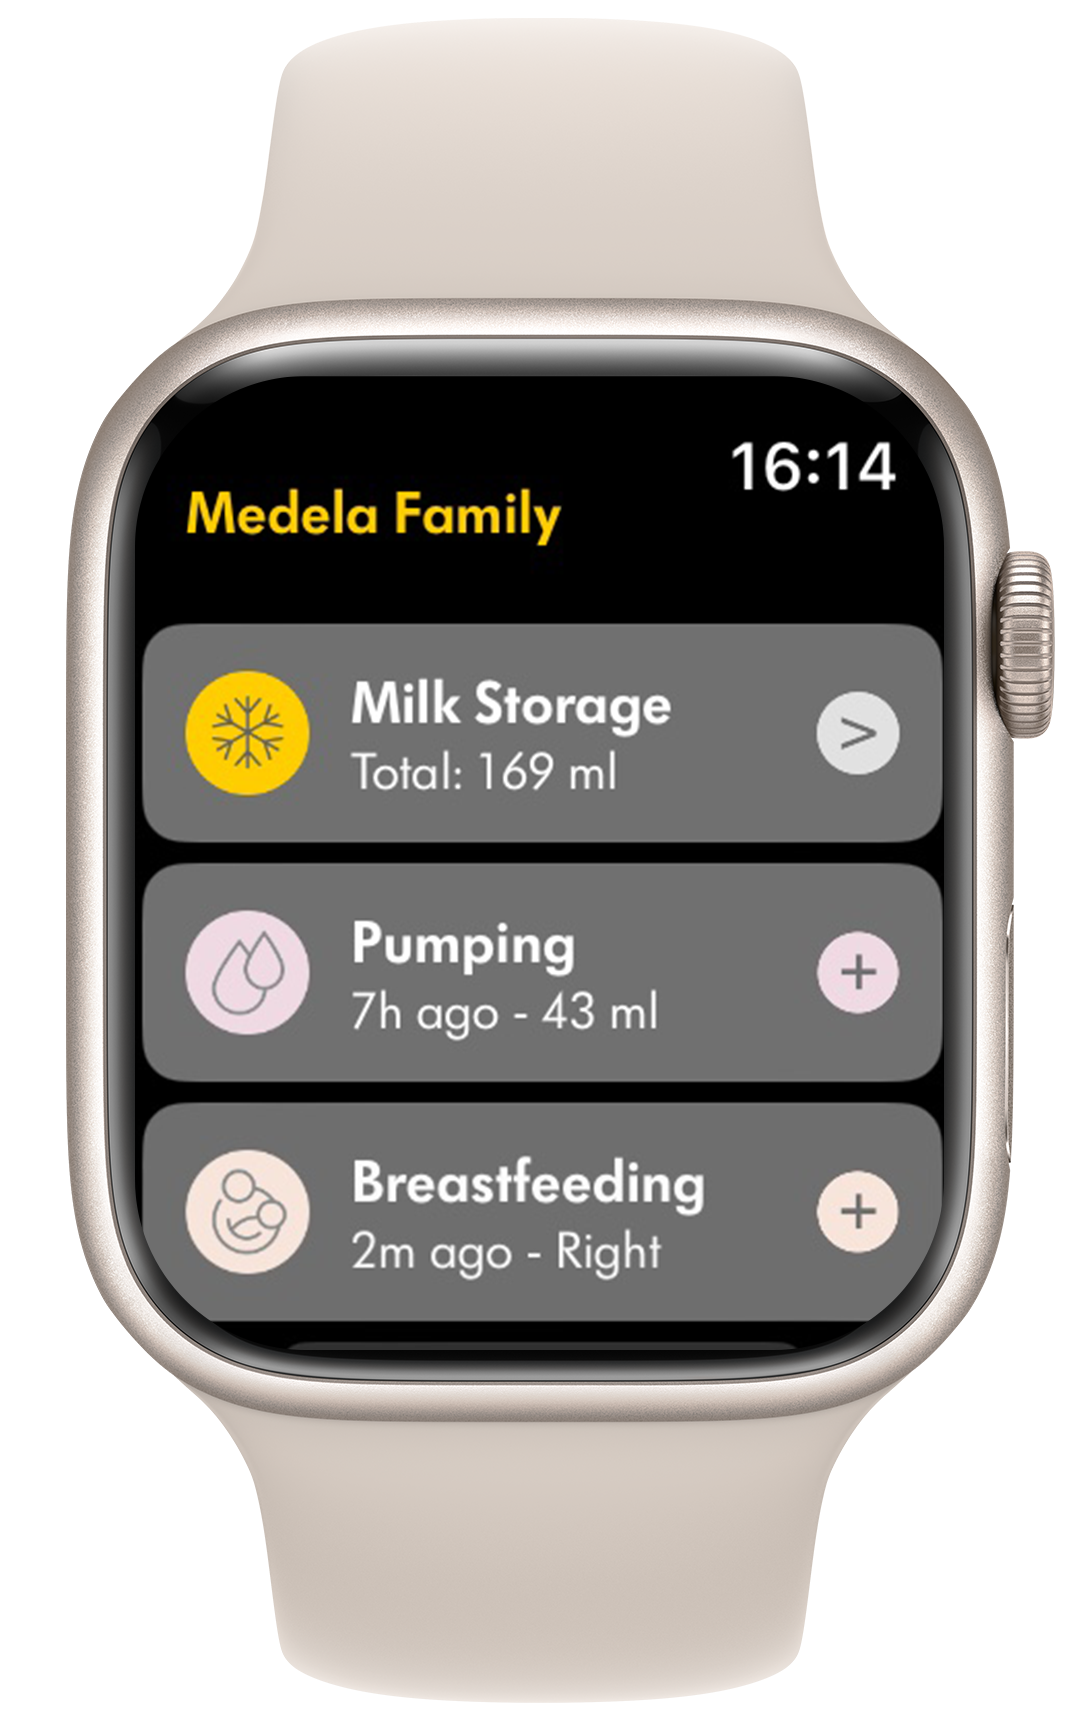 Medela Family Smart Watch App Display